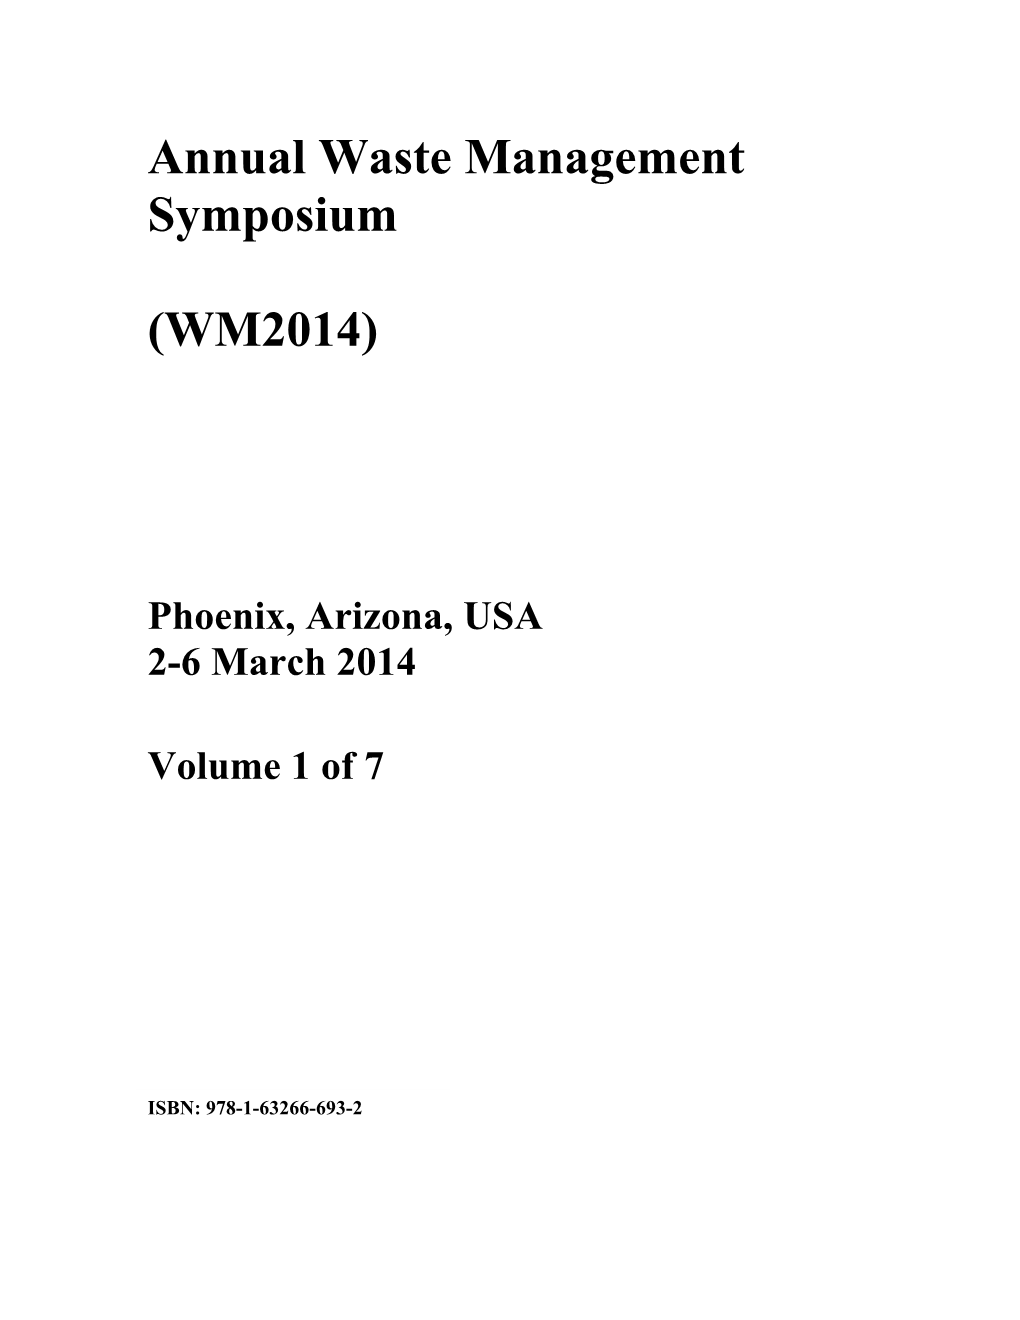 Annual Waste Management Symposium (WM2014)